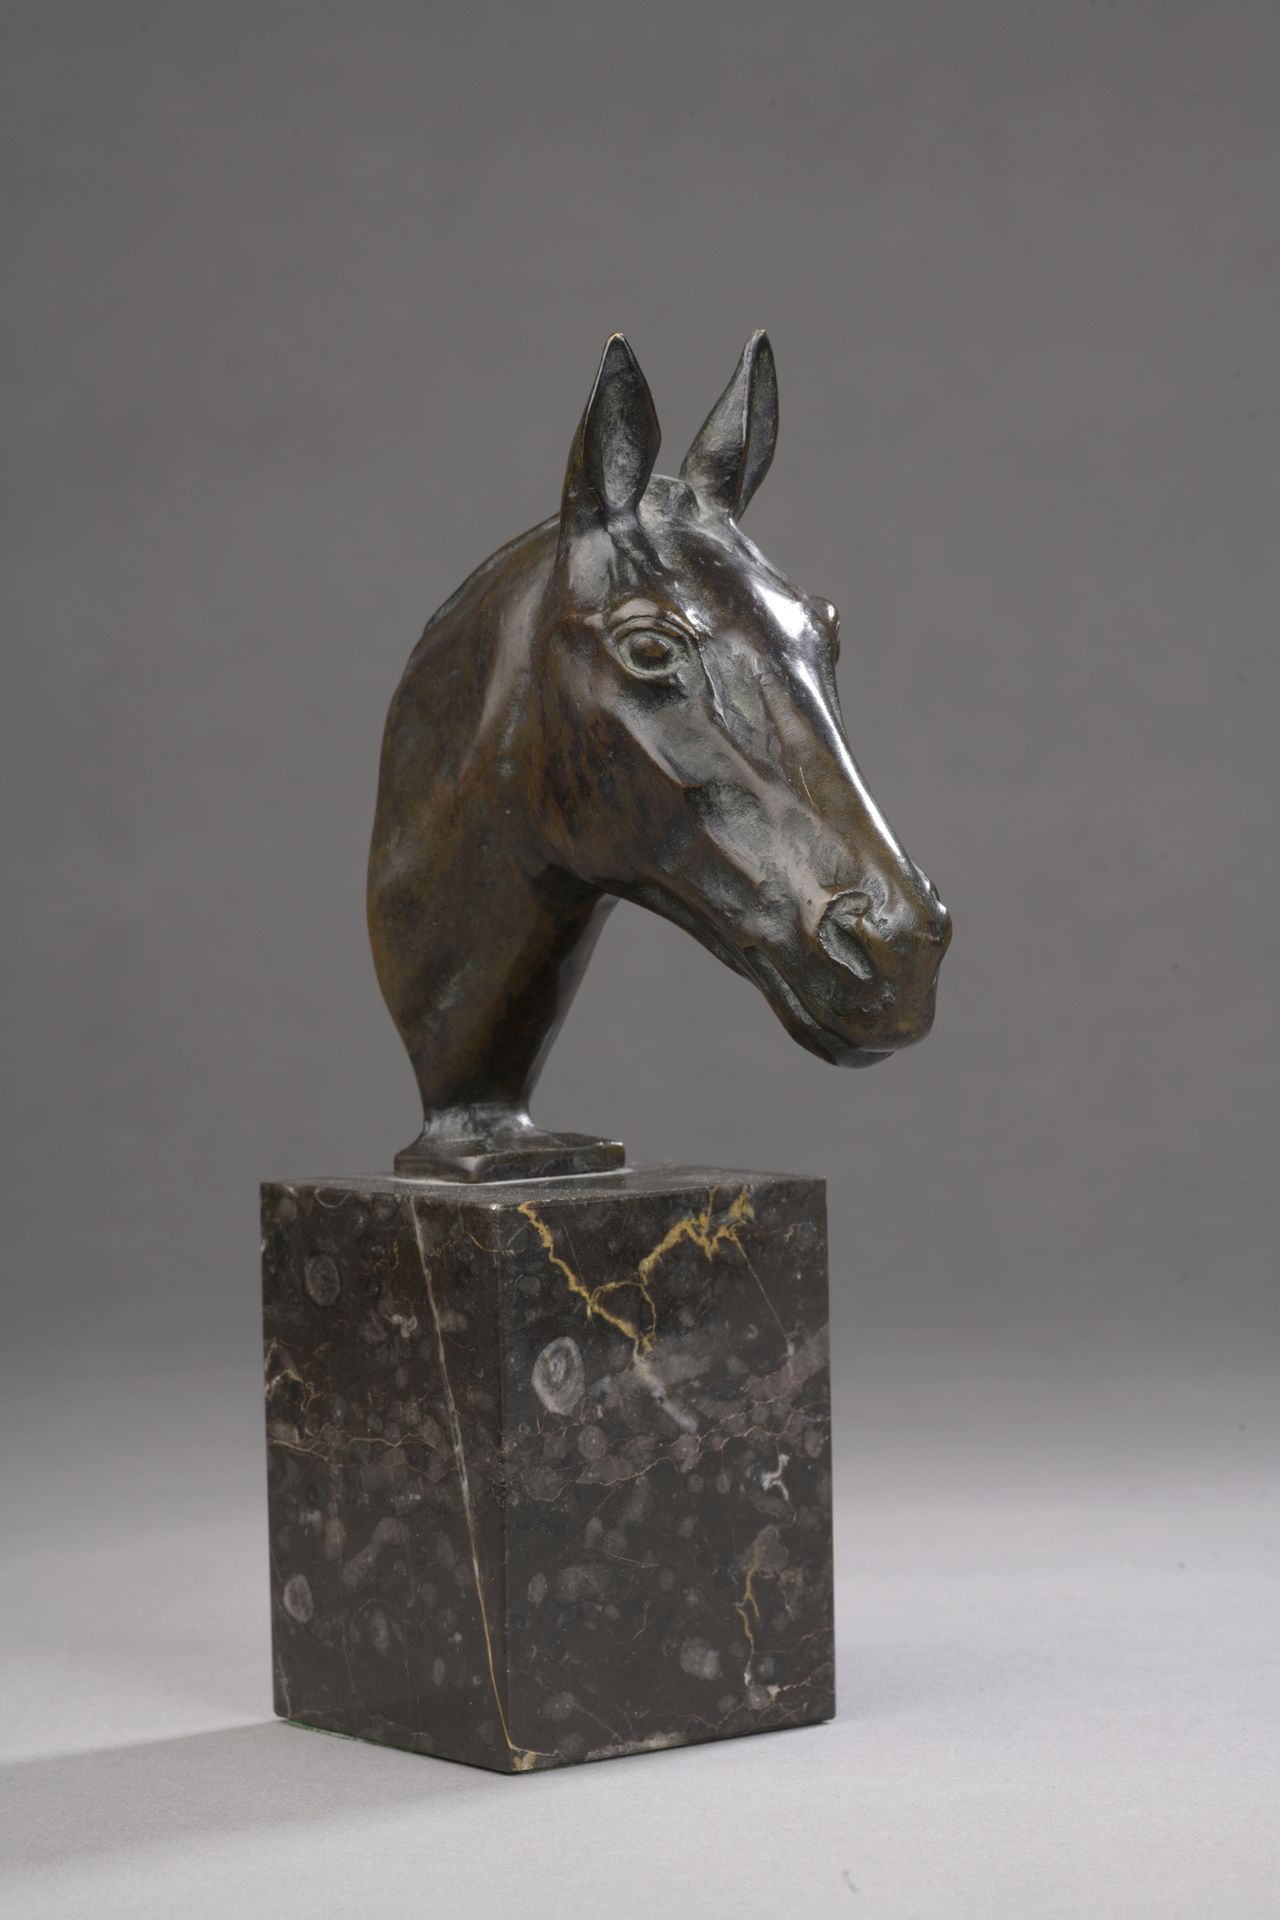 Null 马克斯-勒维里耶 (1891-1973)

一匹纯种马的头部

带有棕色铜锈的青铜器

签名 "M Le Verrier "并标有 "BRONZE"。&hellip;